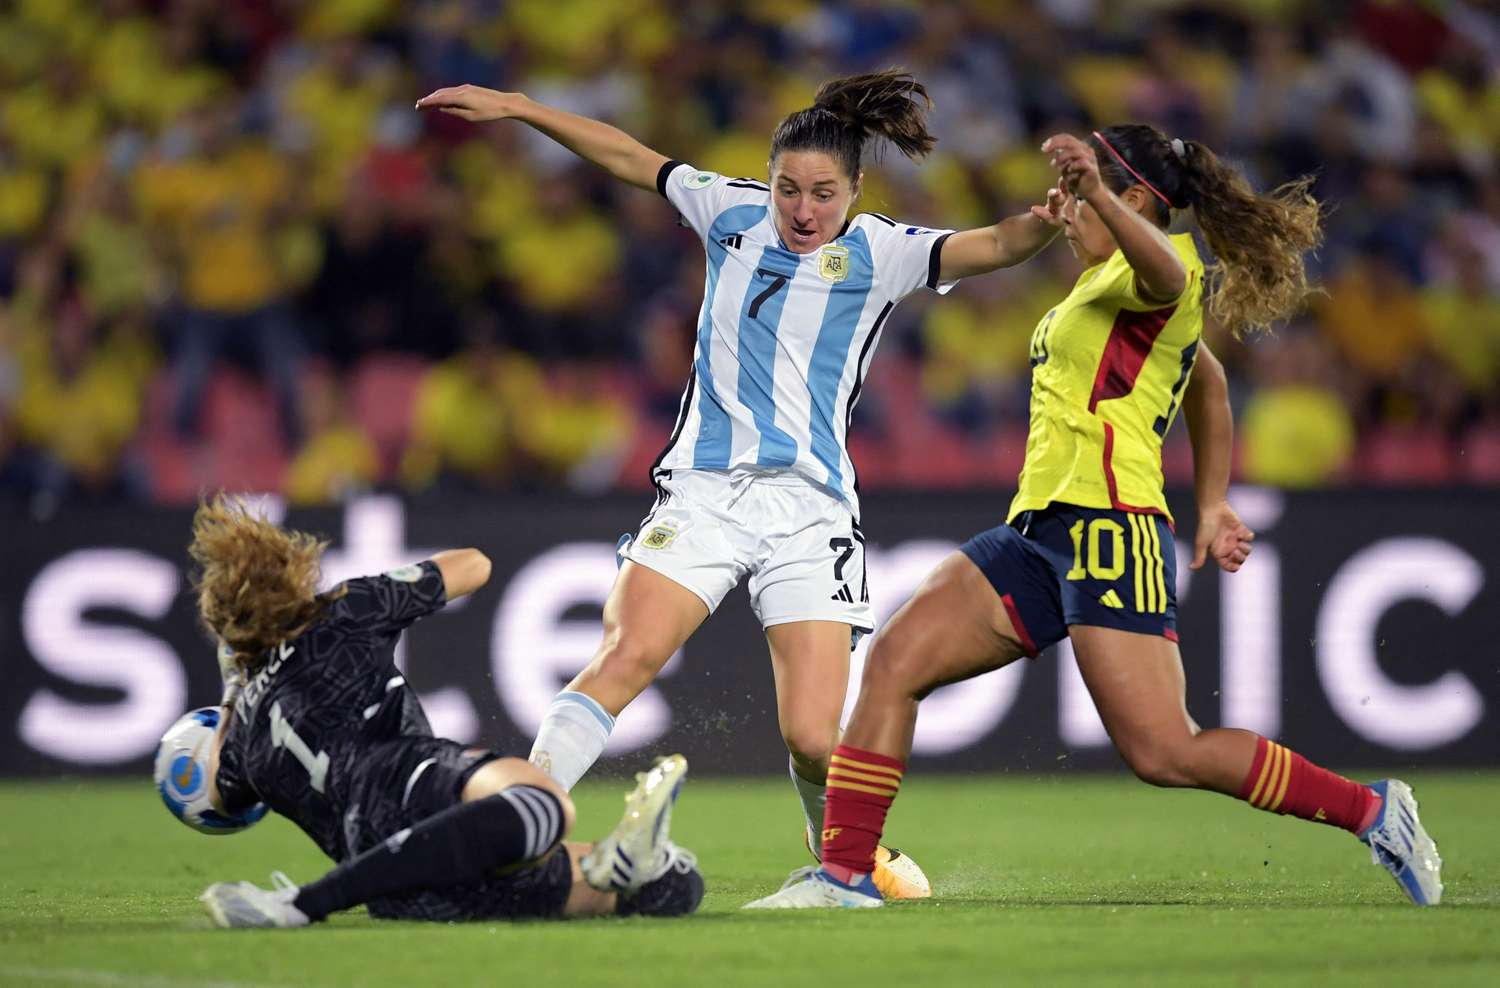 La tandilense Romina Núñez no llega a conectar la pelota ante la salida de la colombiana Pérez.